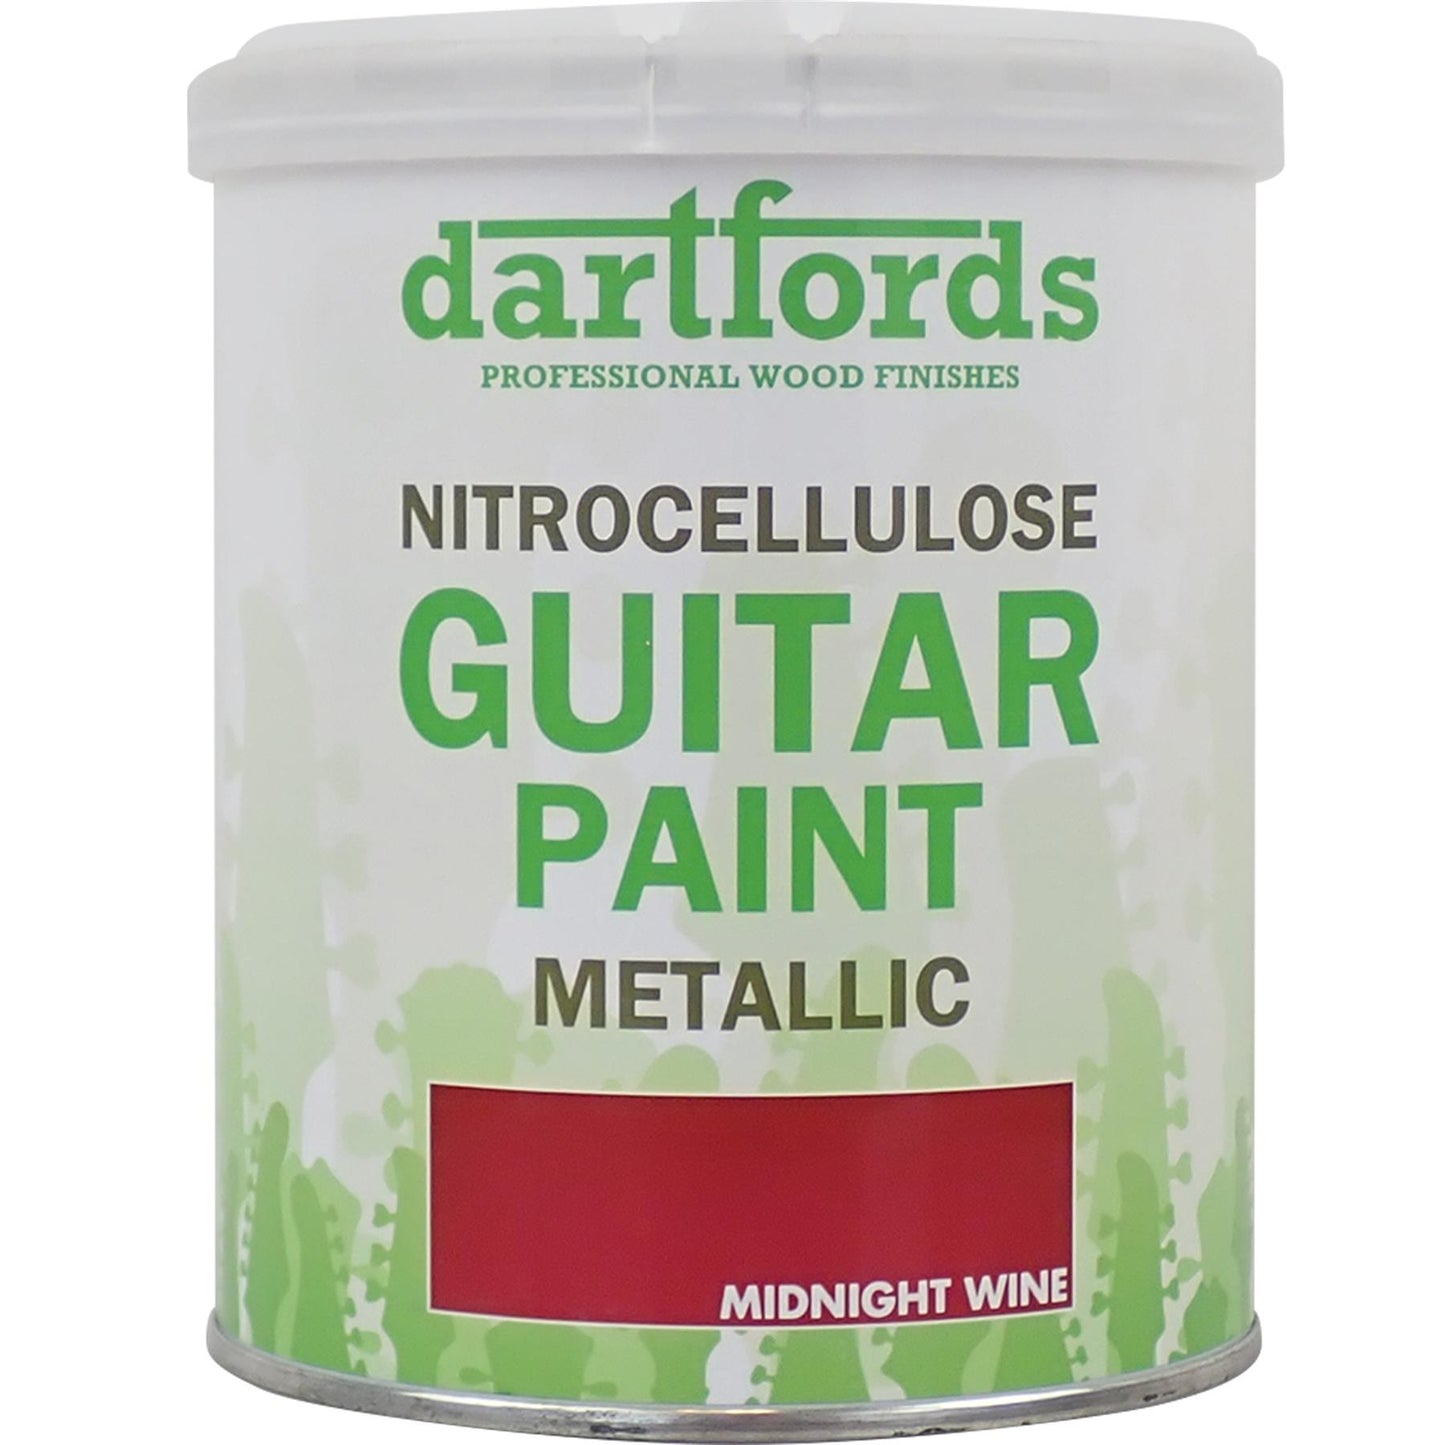 dartfords Midnight Wine Metallic Nitrocellulose Guitar Paint - 1 litre Tin